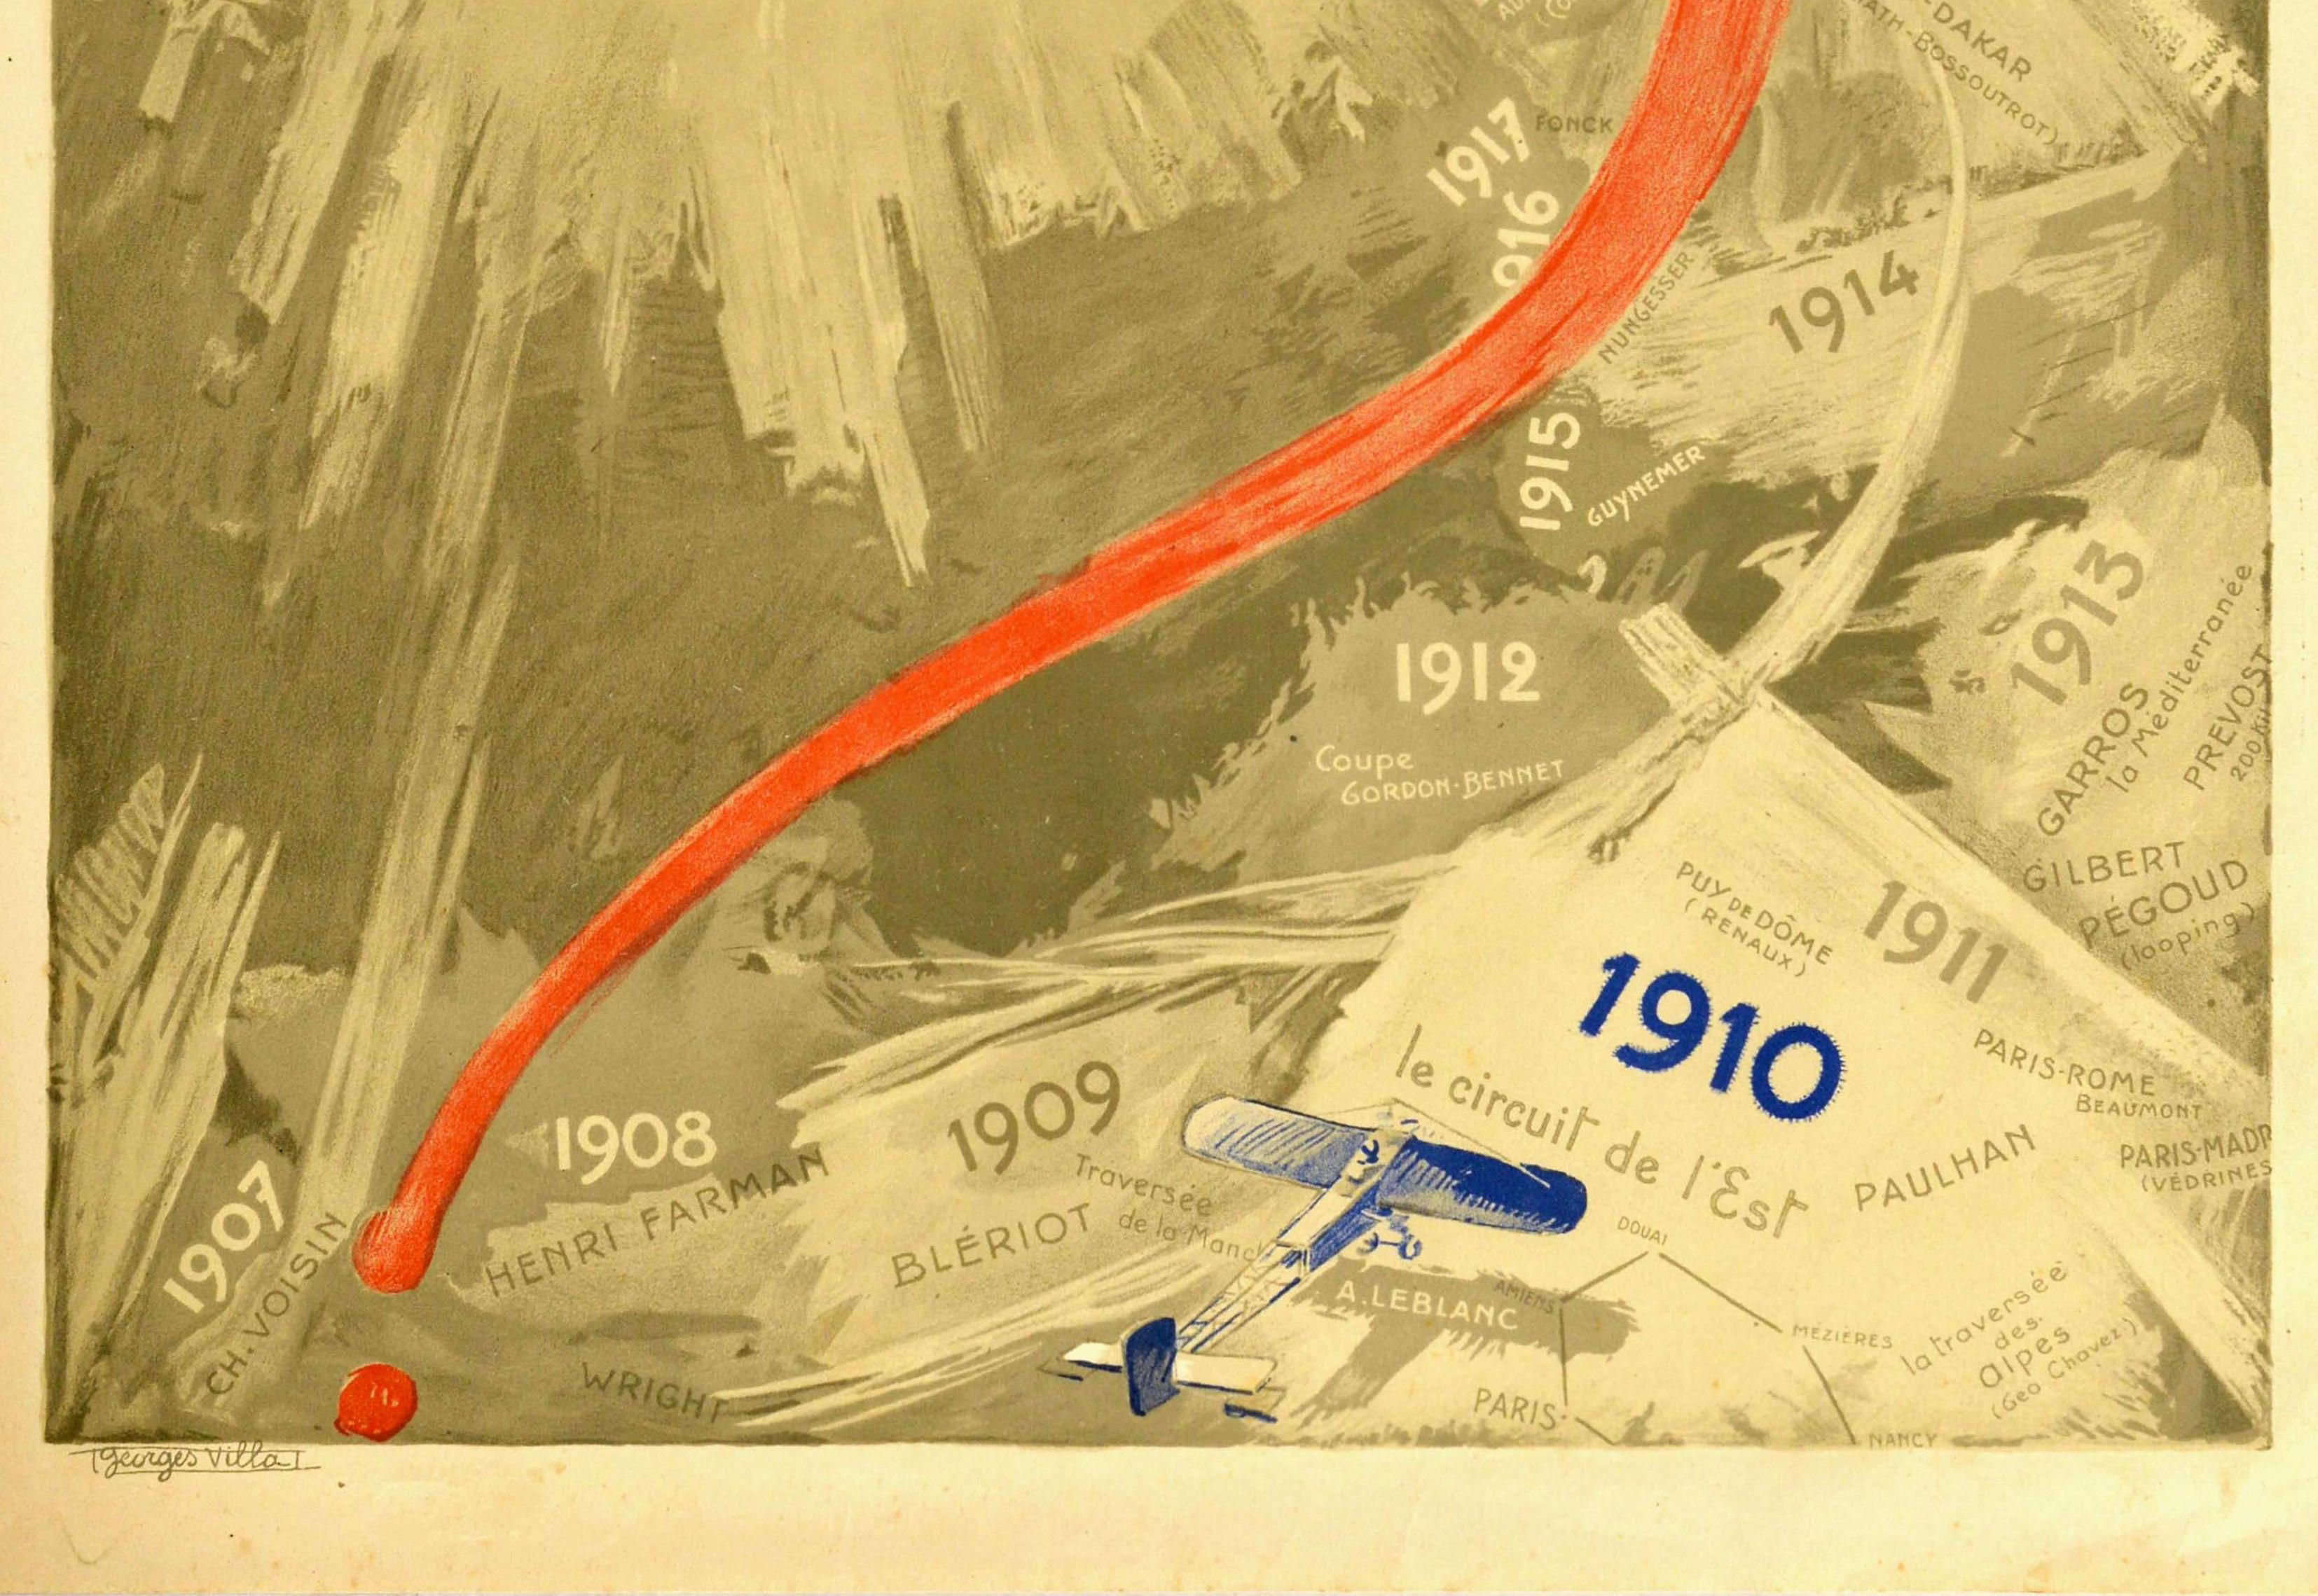 French Original Vintage Poster Aux Pessimistes Paris To New York Plane Aviation Record